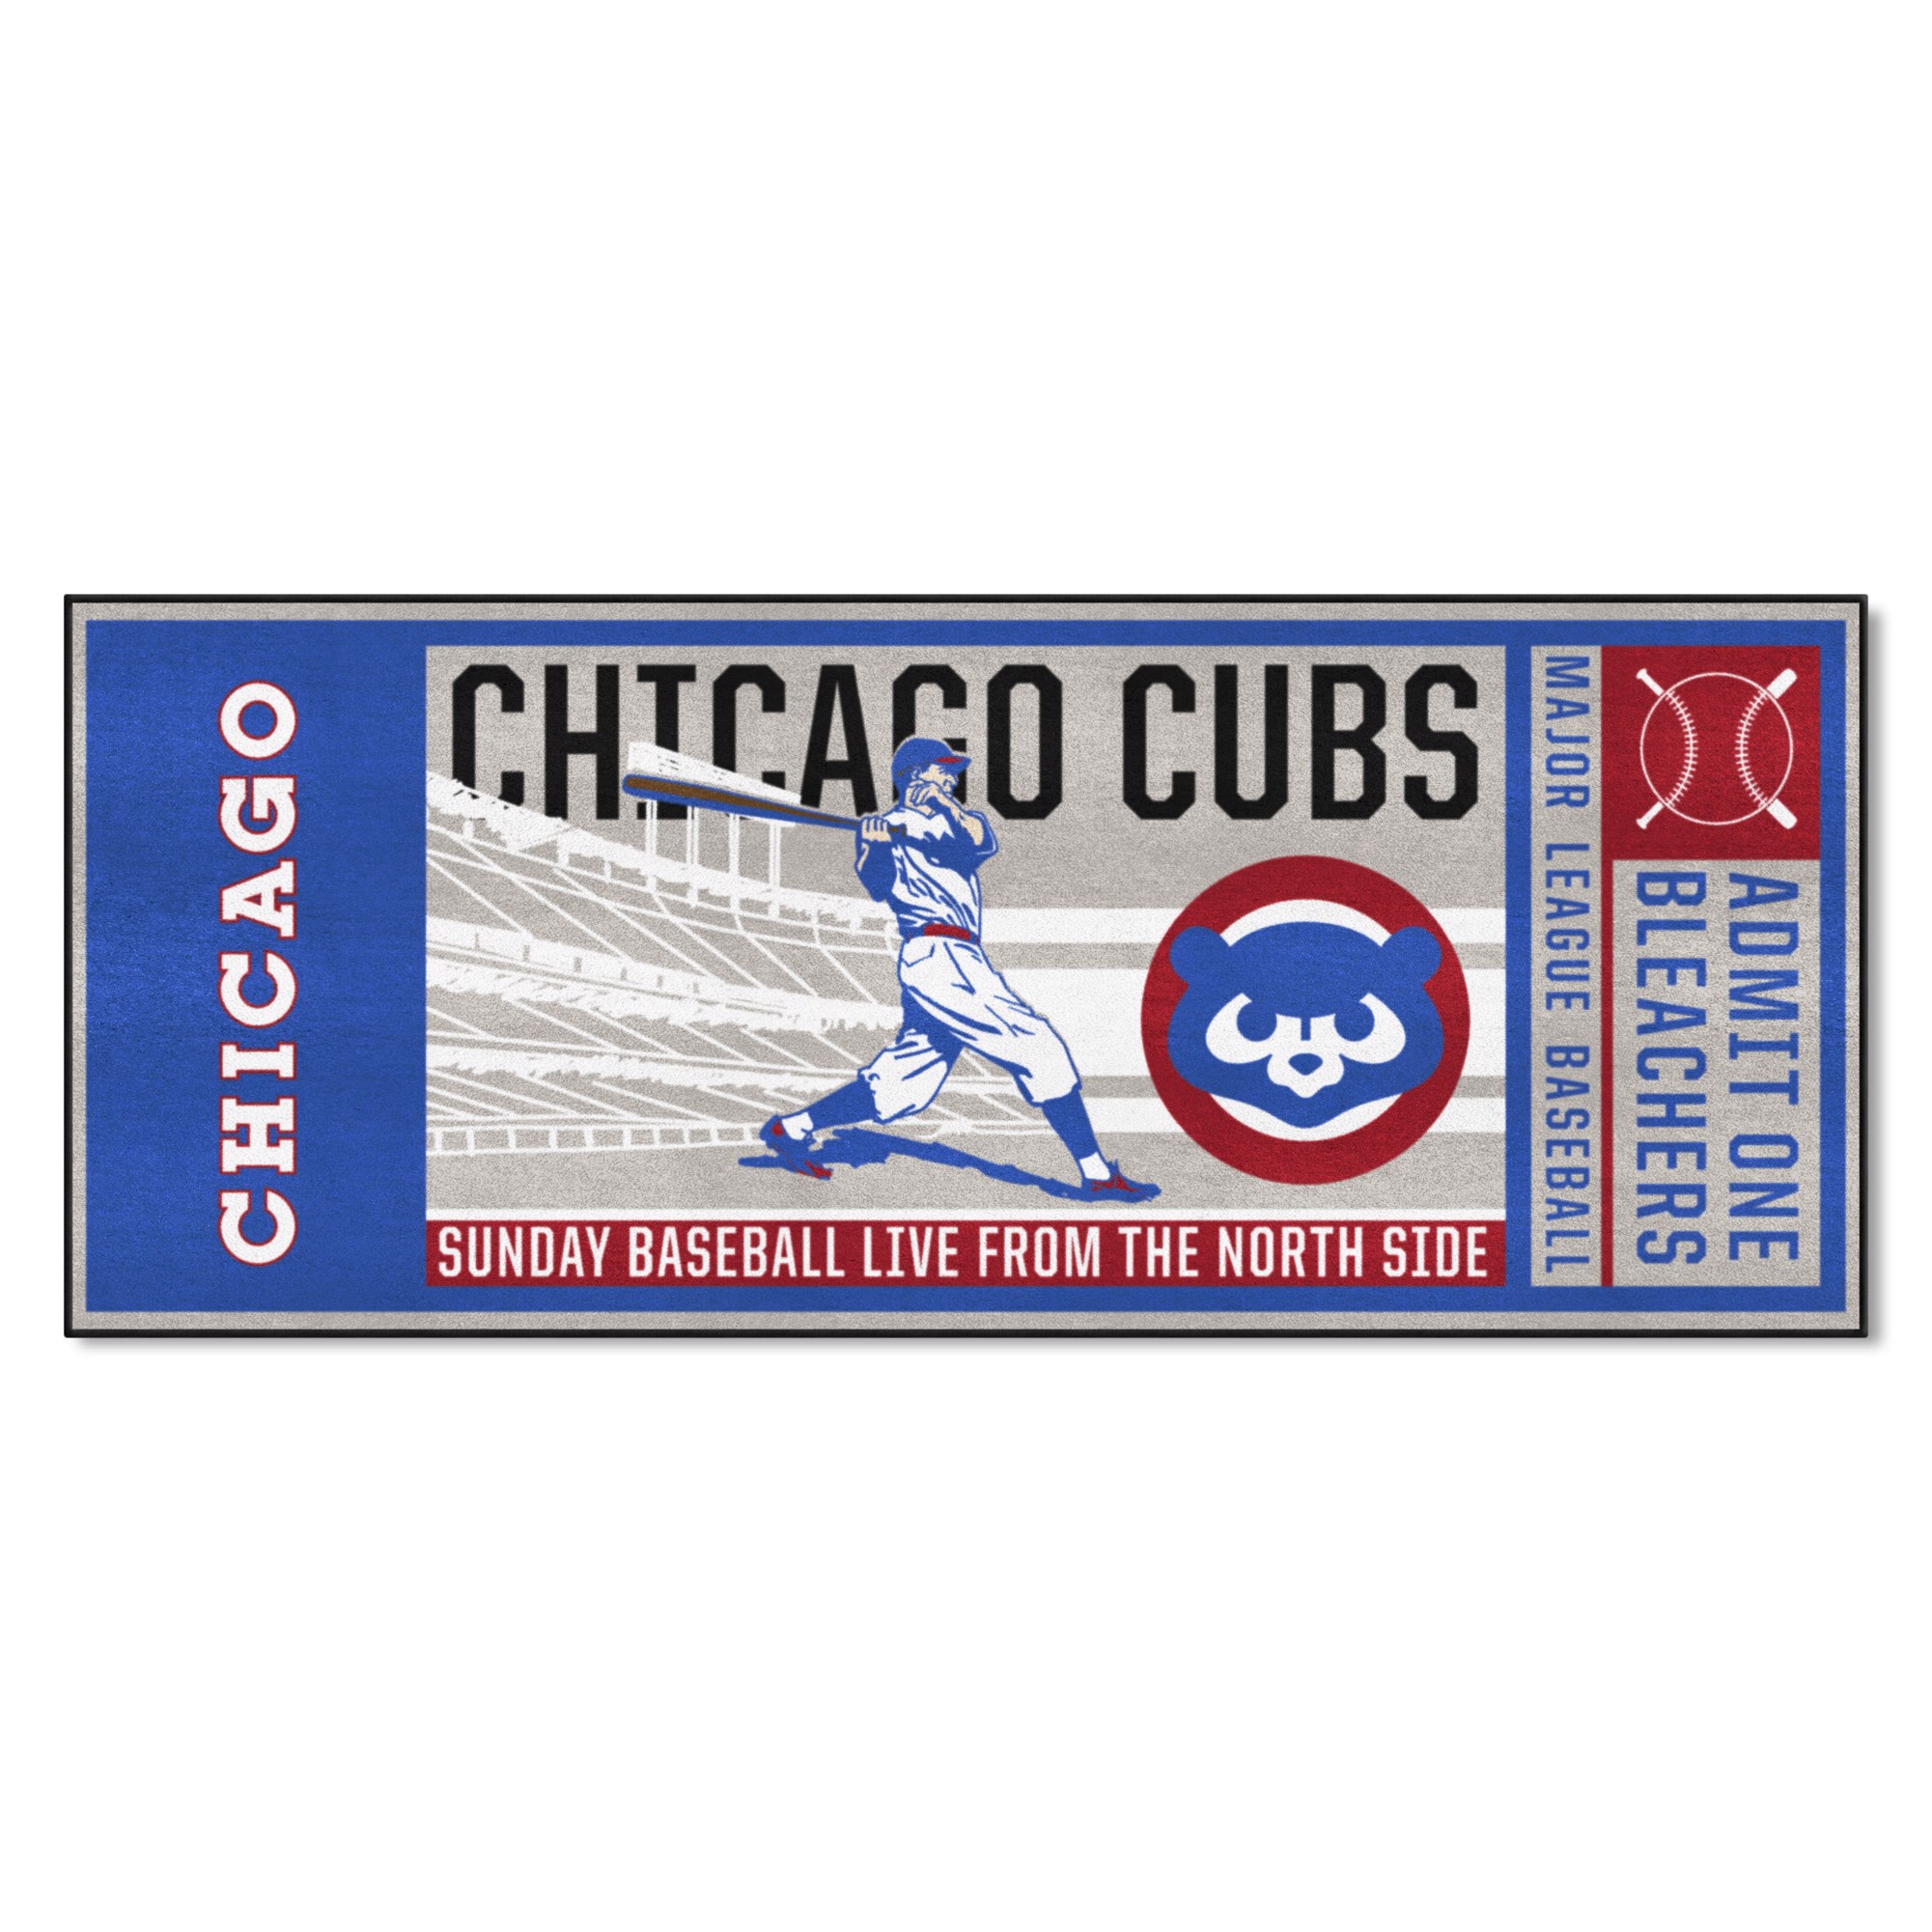  Chicago Baseball - Vintage White Sox Bumper Sticker